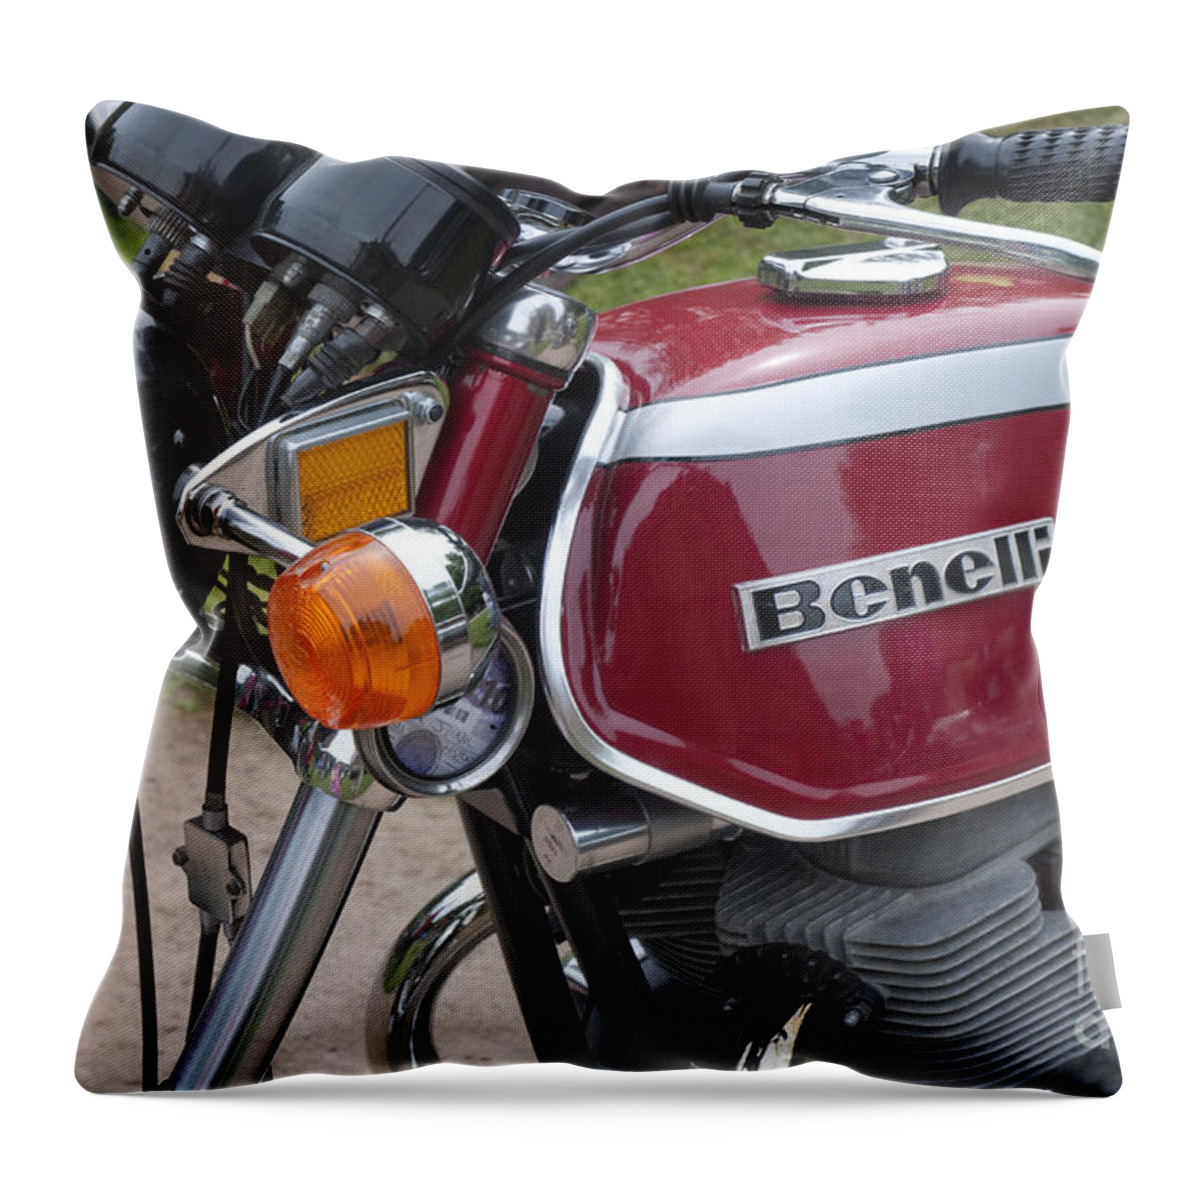 Vintage Benelli Bike Throw Pillow featuring the photograph Vintage Benelli Bike by Brenda Kean